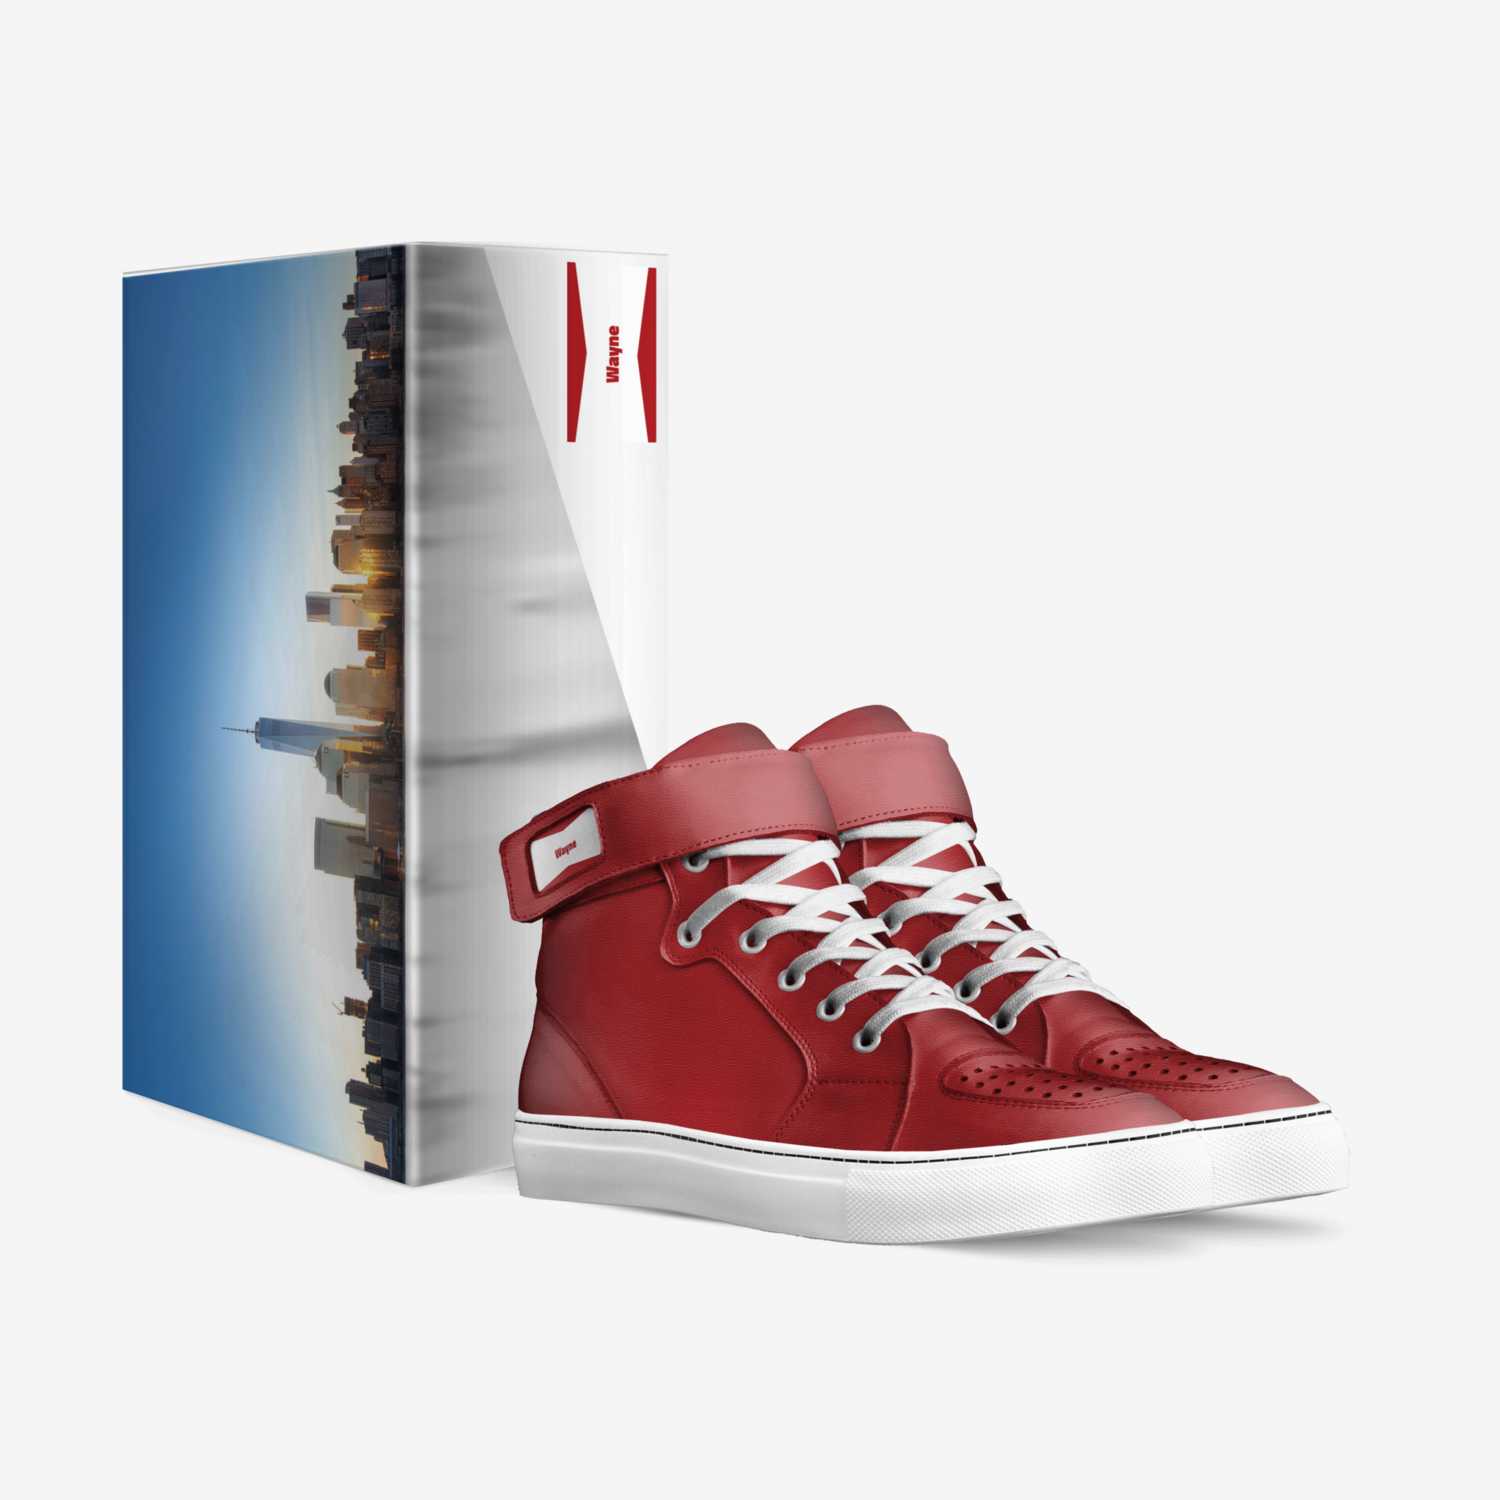 Wayne custom made in Italy shoes by Dalton Leu | Box view